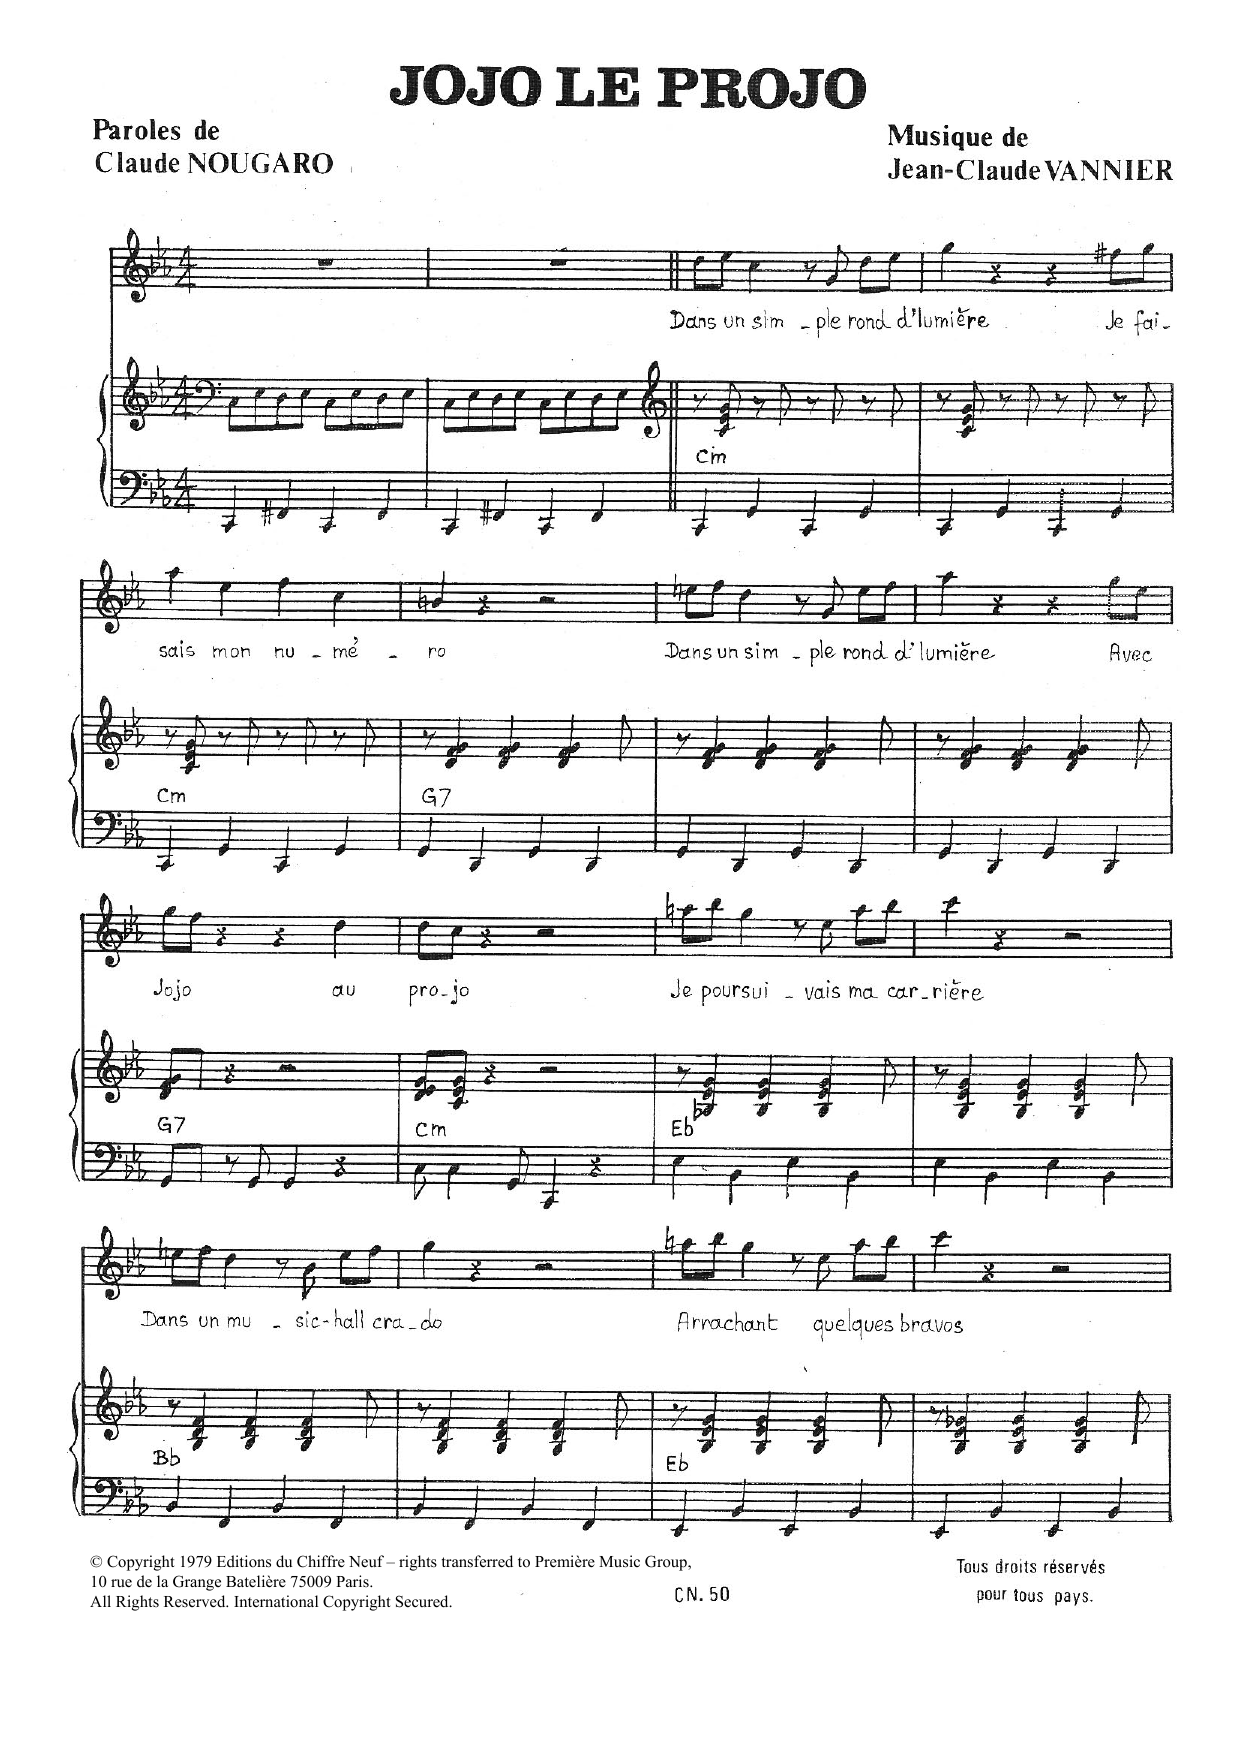 Claude Nougaro Jojo Le Projo Sheet Music Notes & Chords for Piano & Vocal - Download or Print PDF